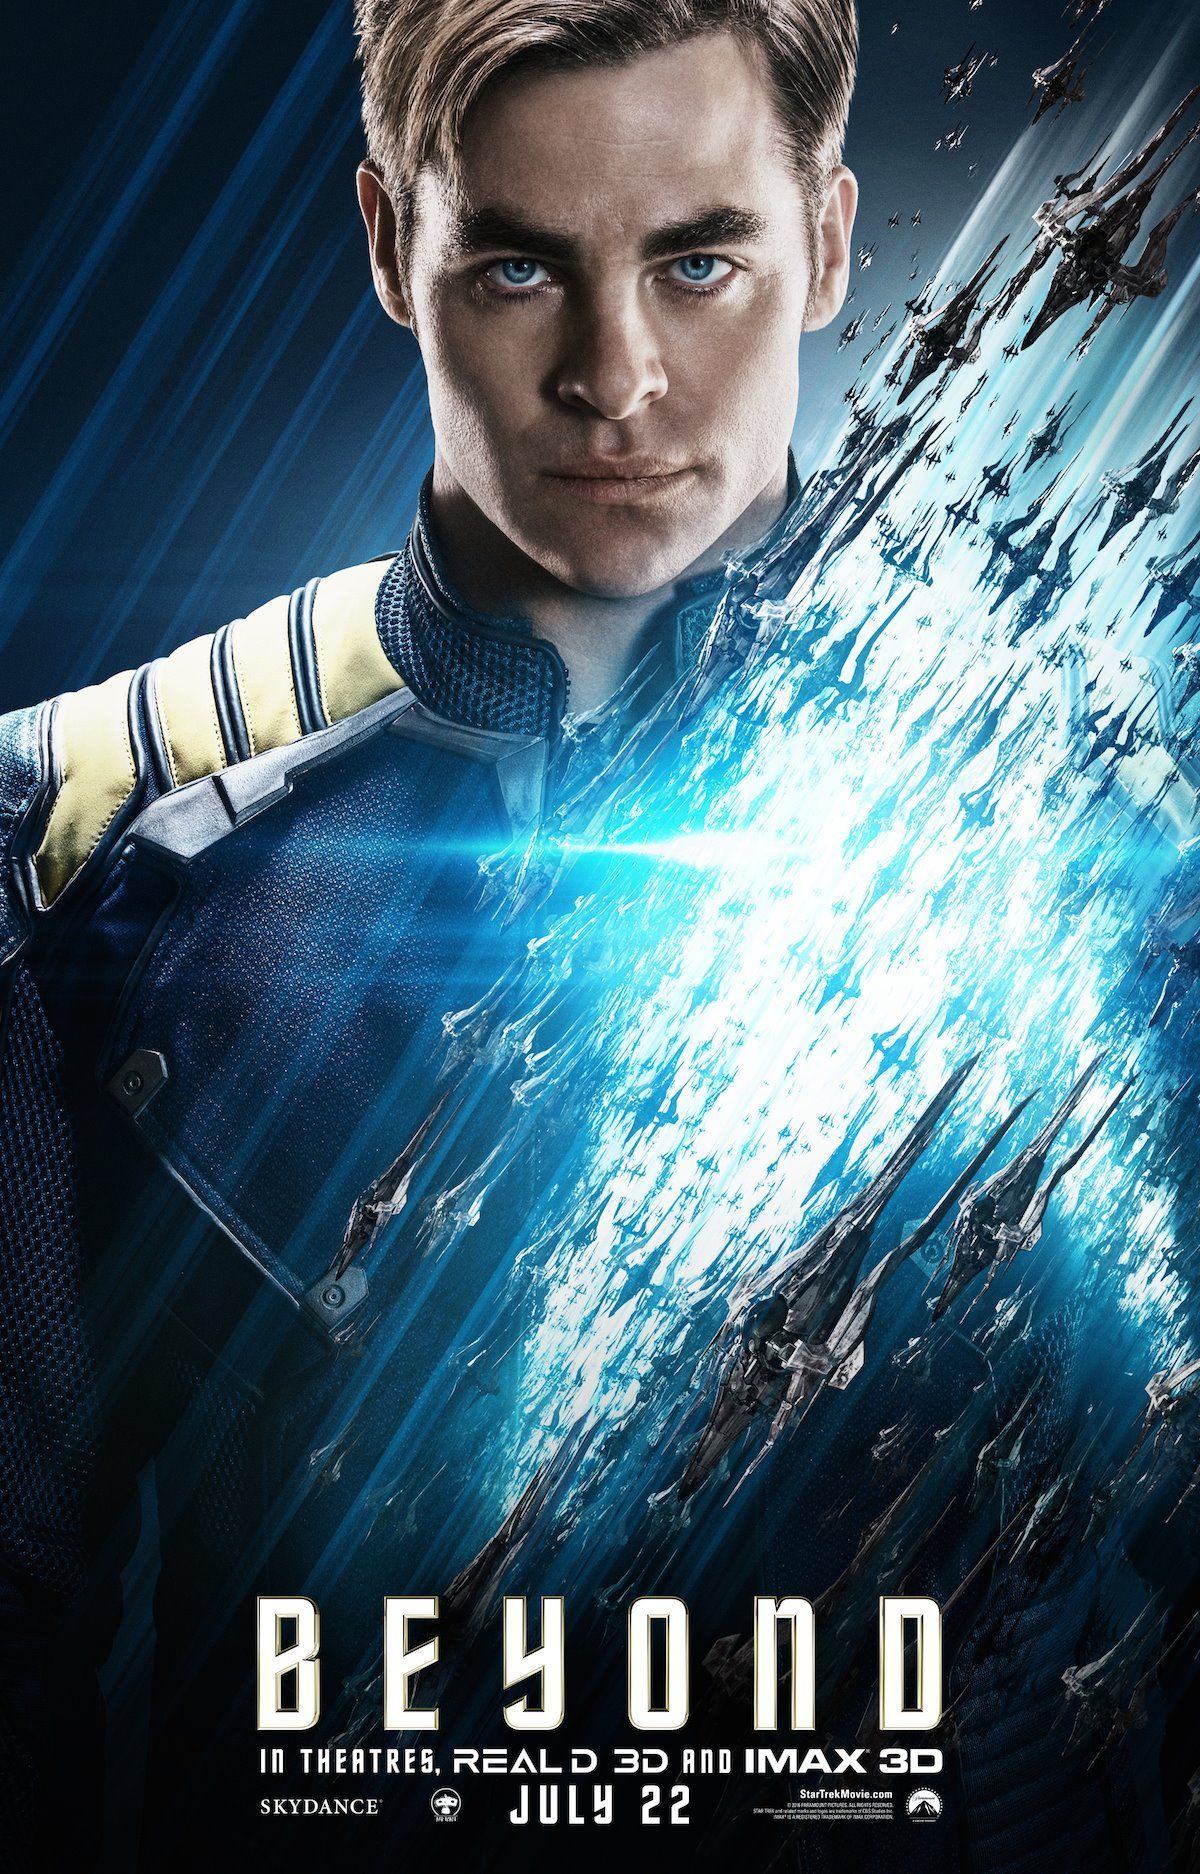 Star Trek Beyond Poster - Kirk (Chris Pine)